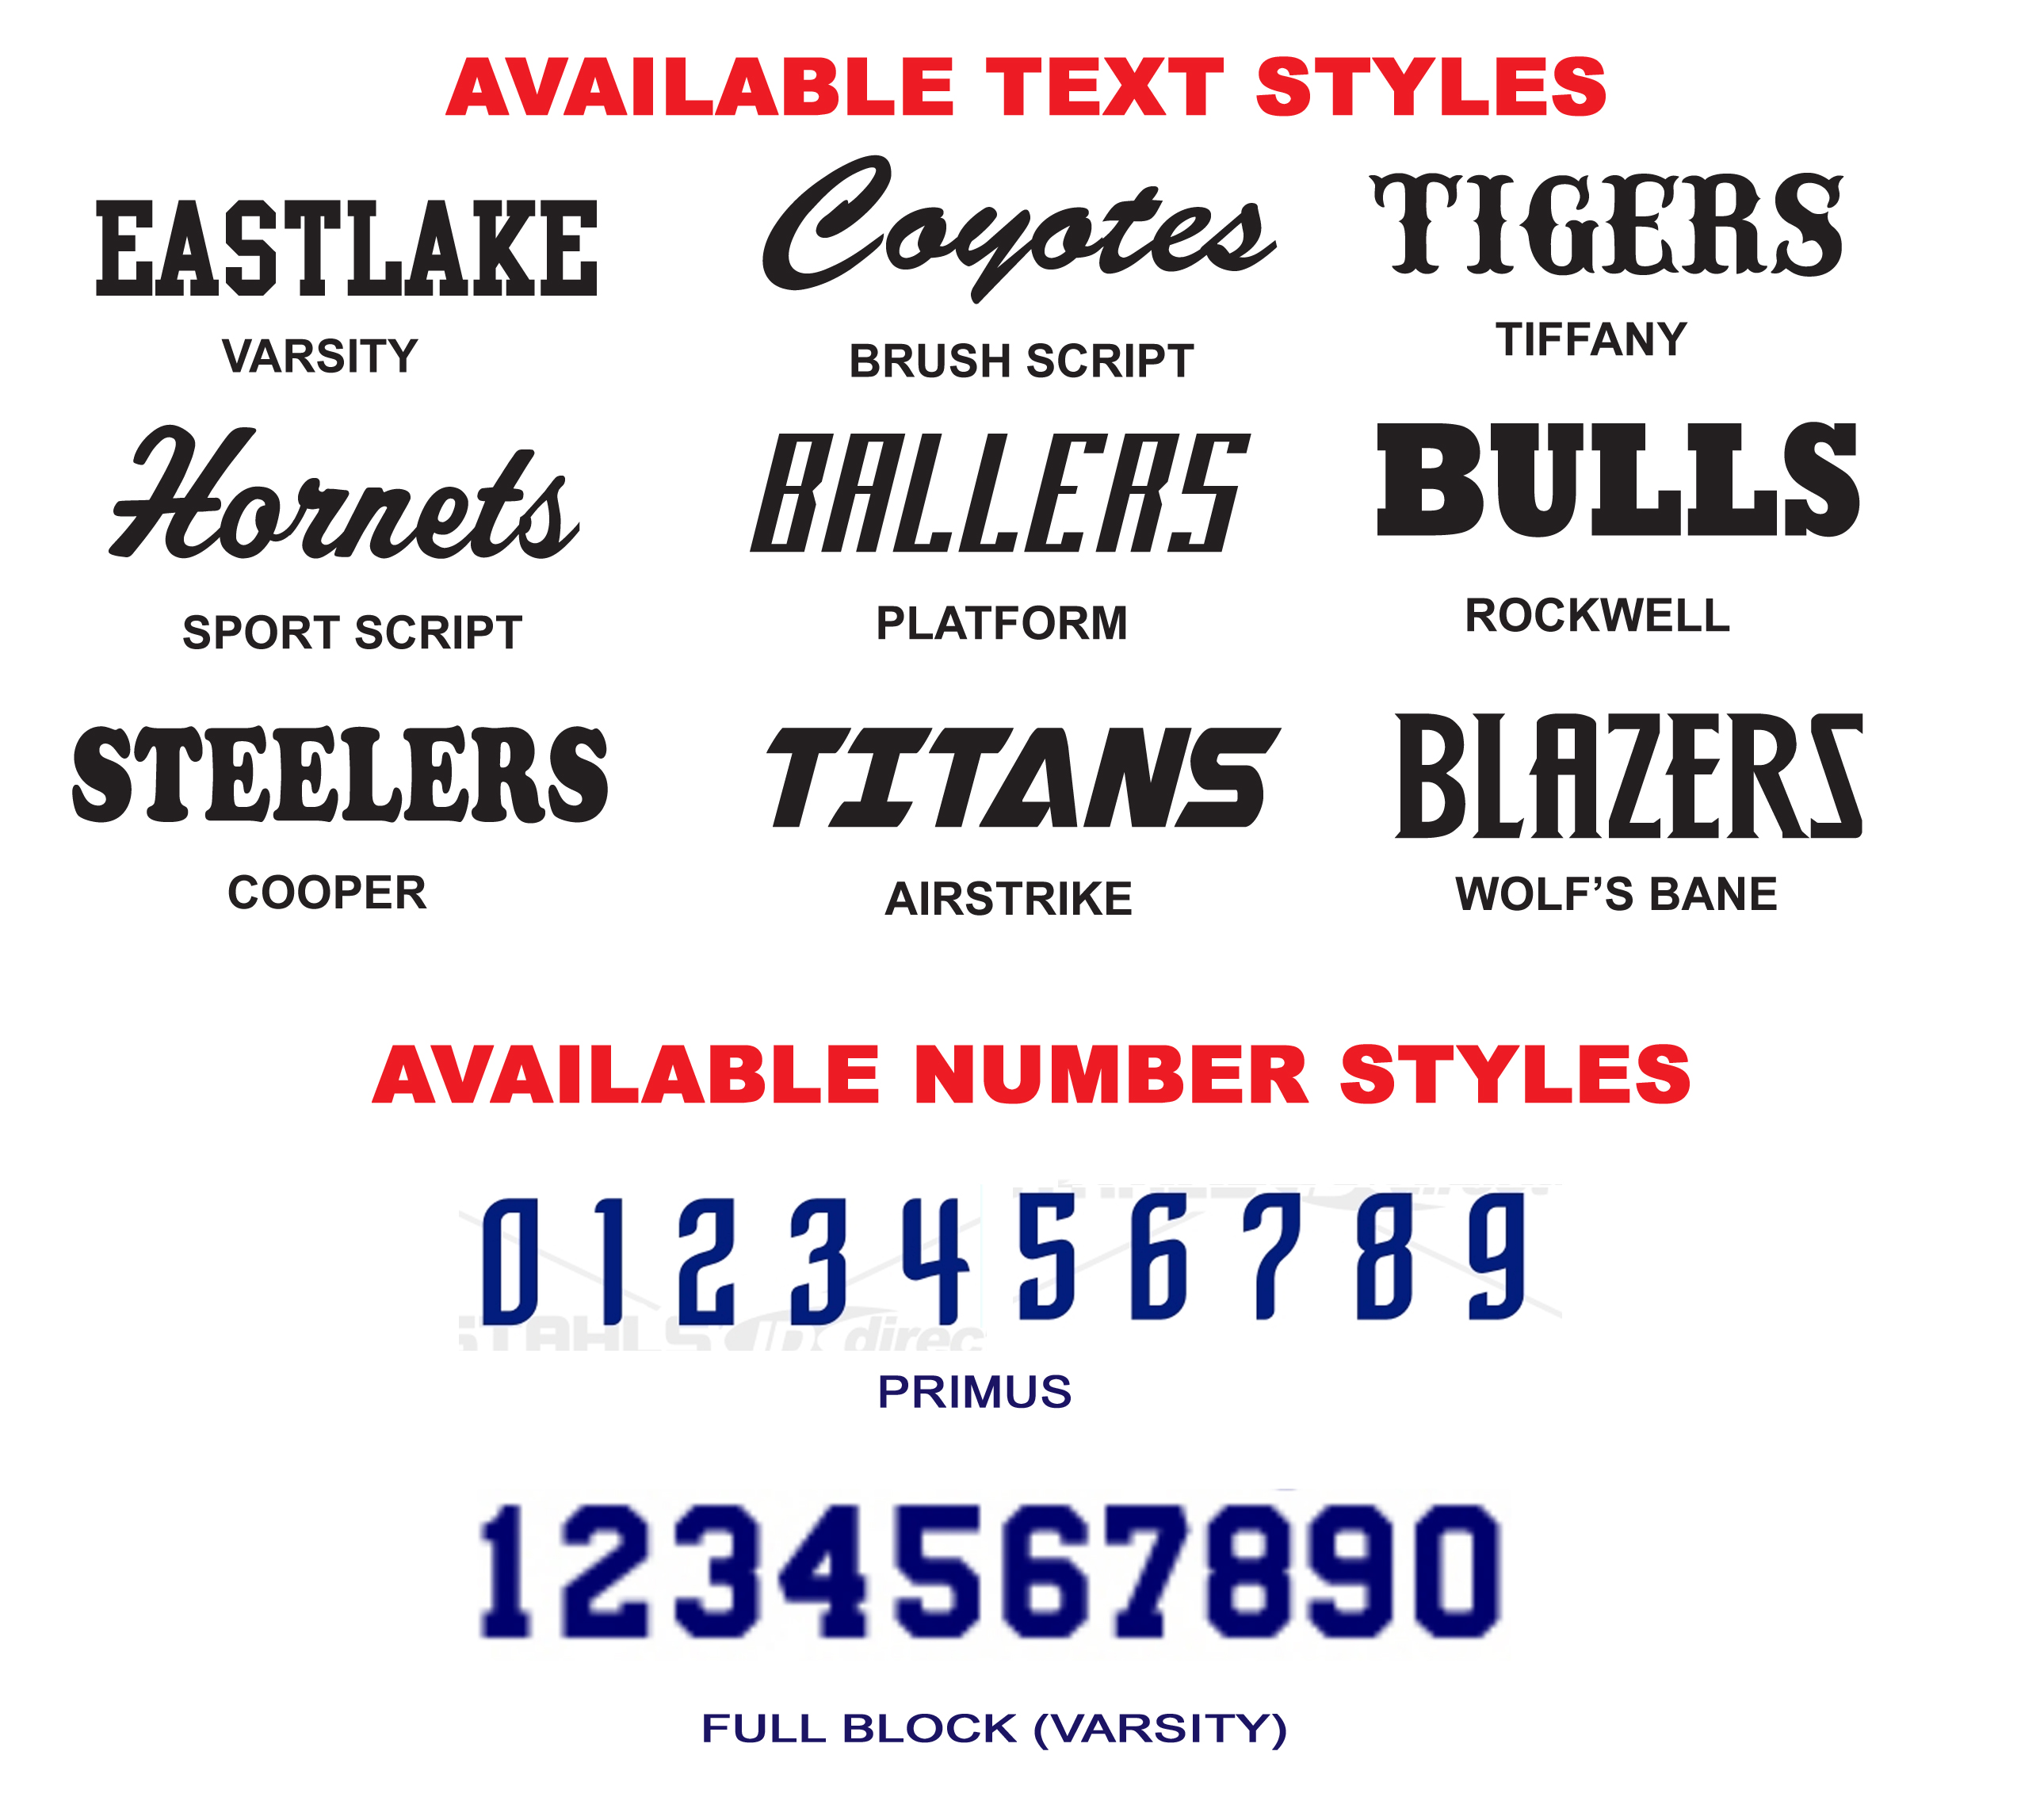 Font Styles and Texas Rangers Baseball 